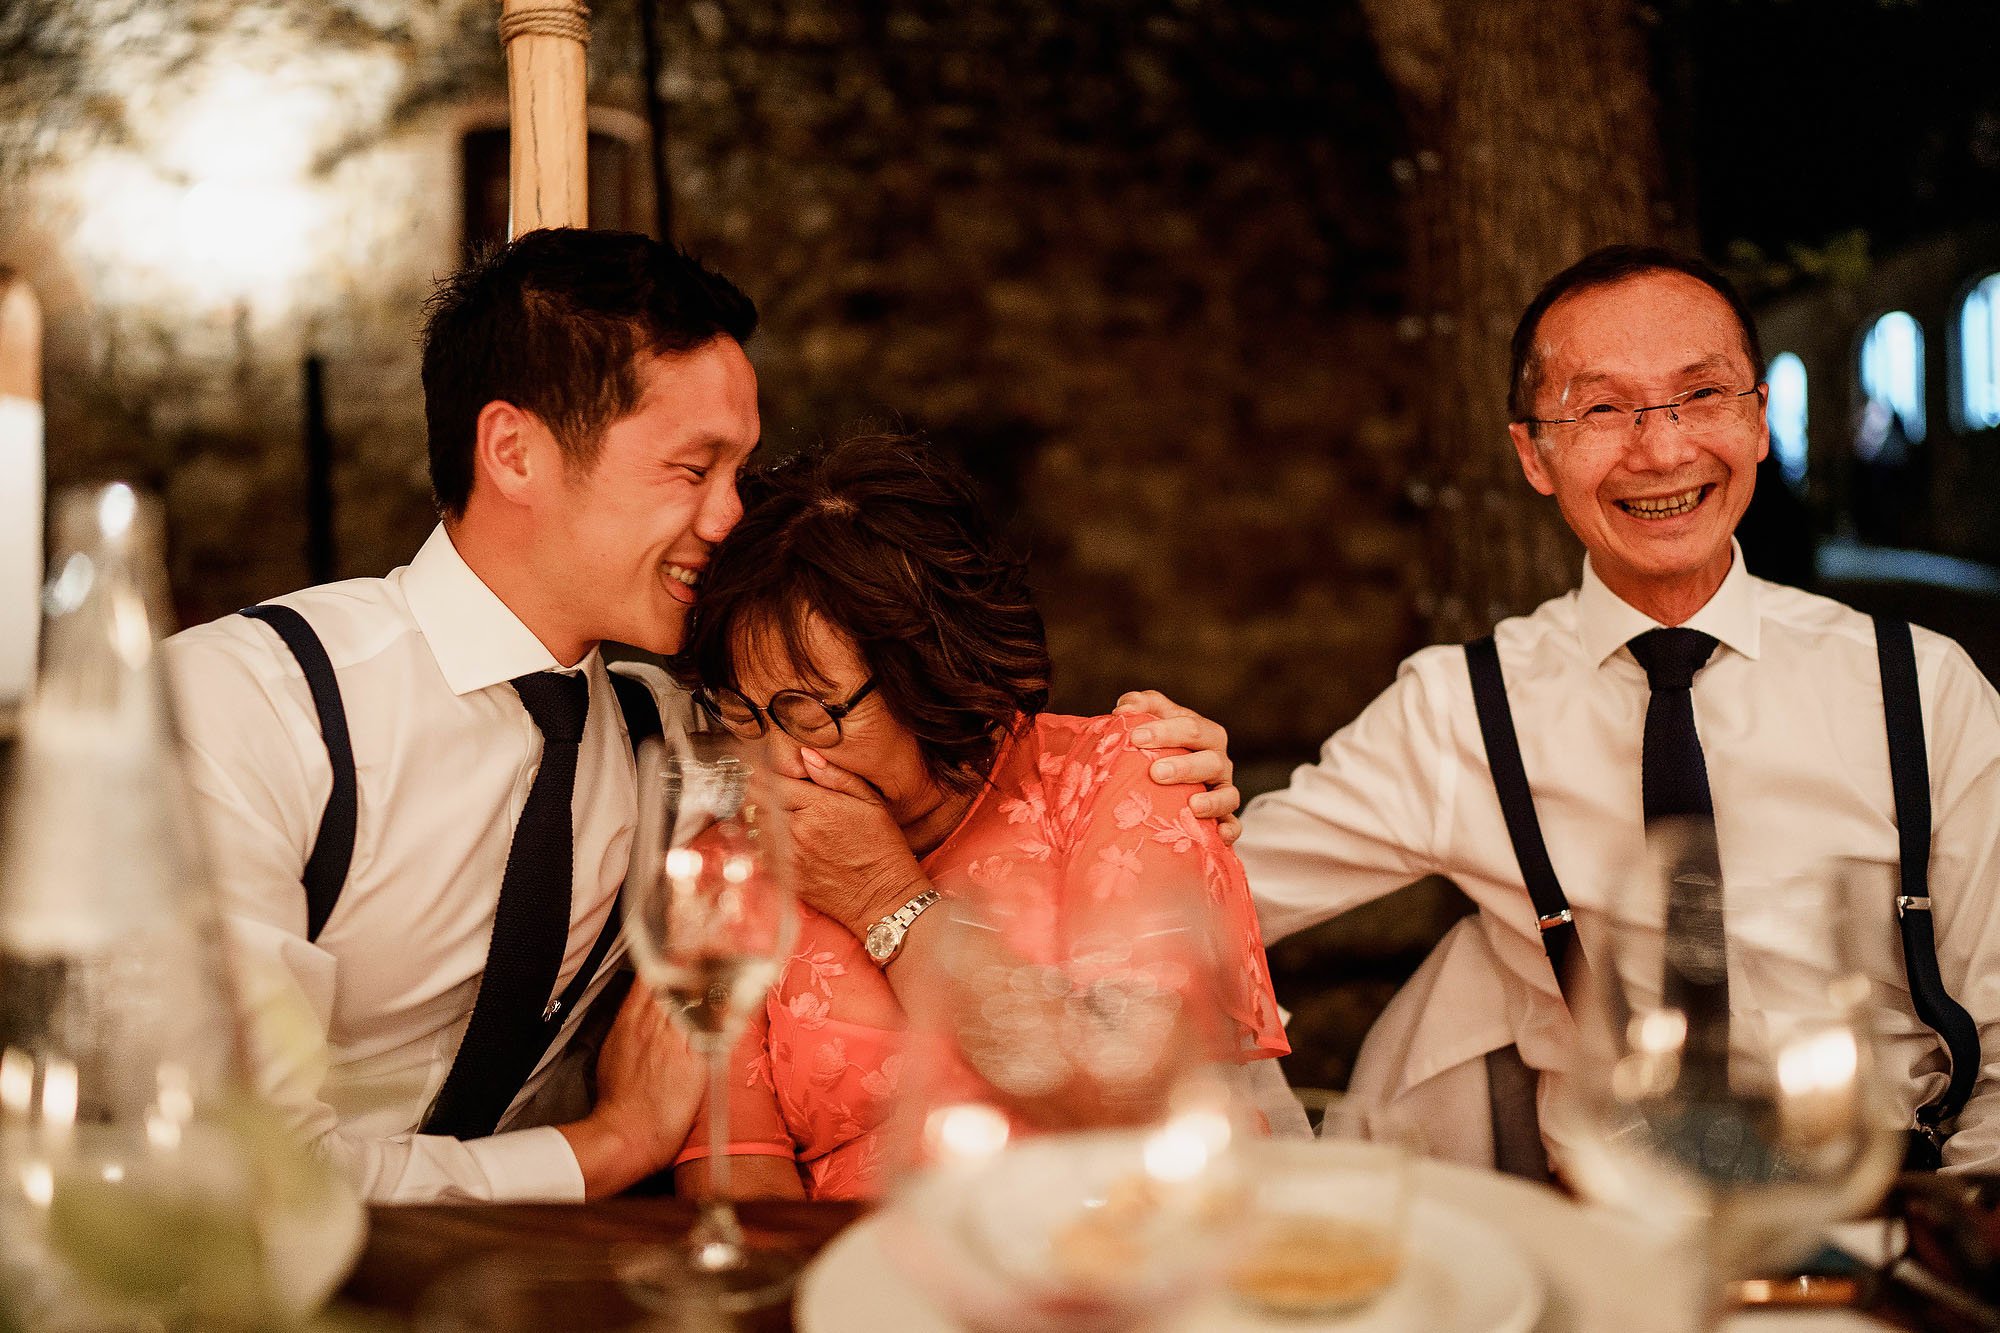 Tuscan vineyard wedding le filigare italy - arj photography®